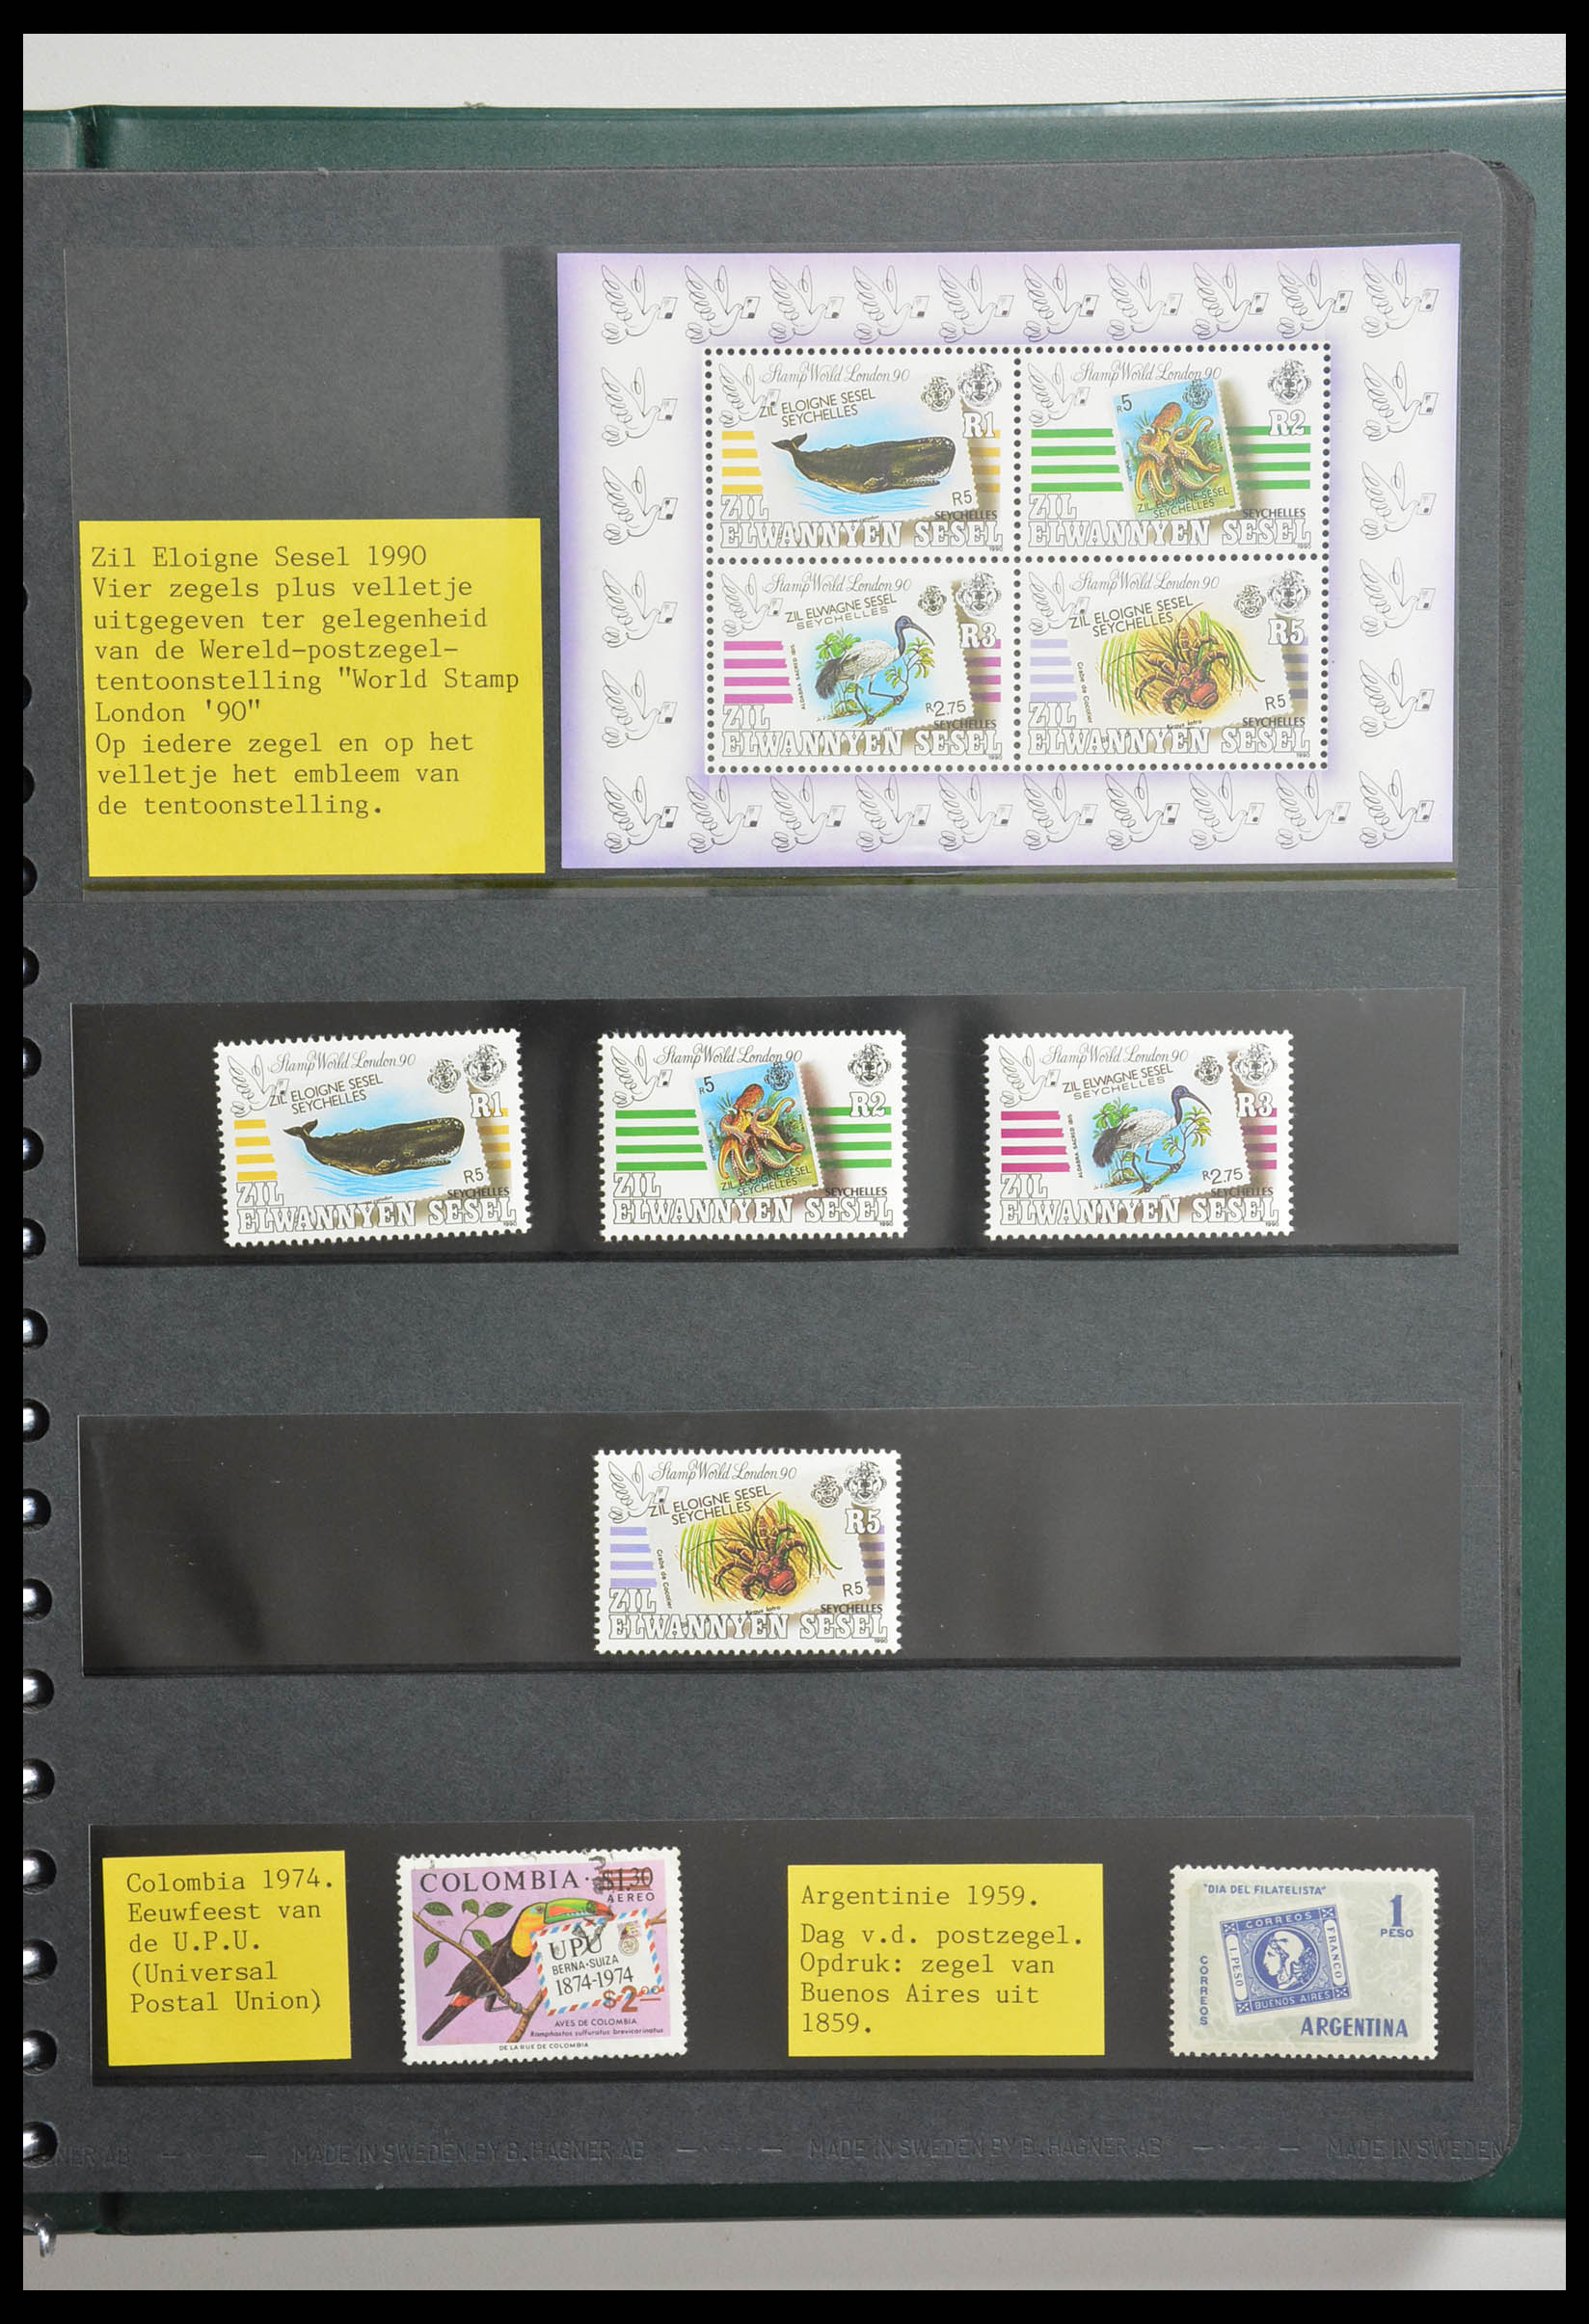 28337 098 - 28337 Postzegel op postzegel 1840-2001.